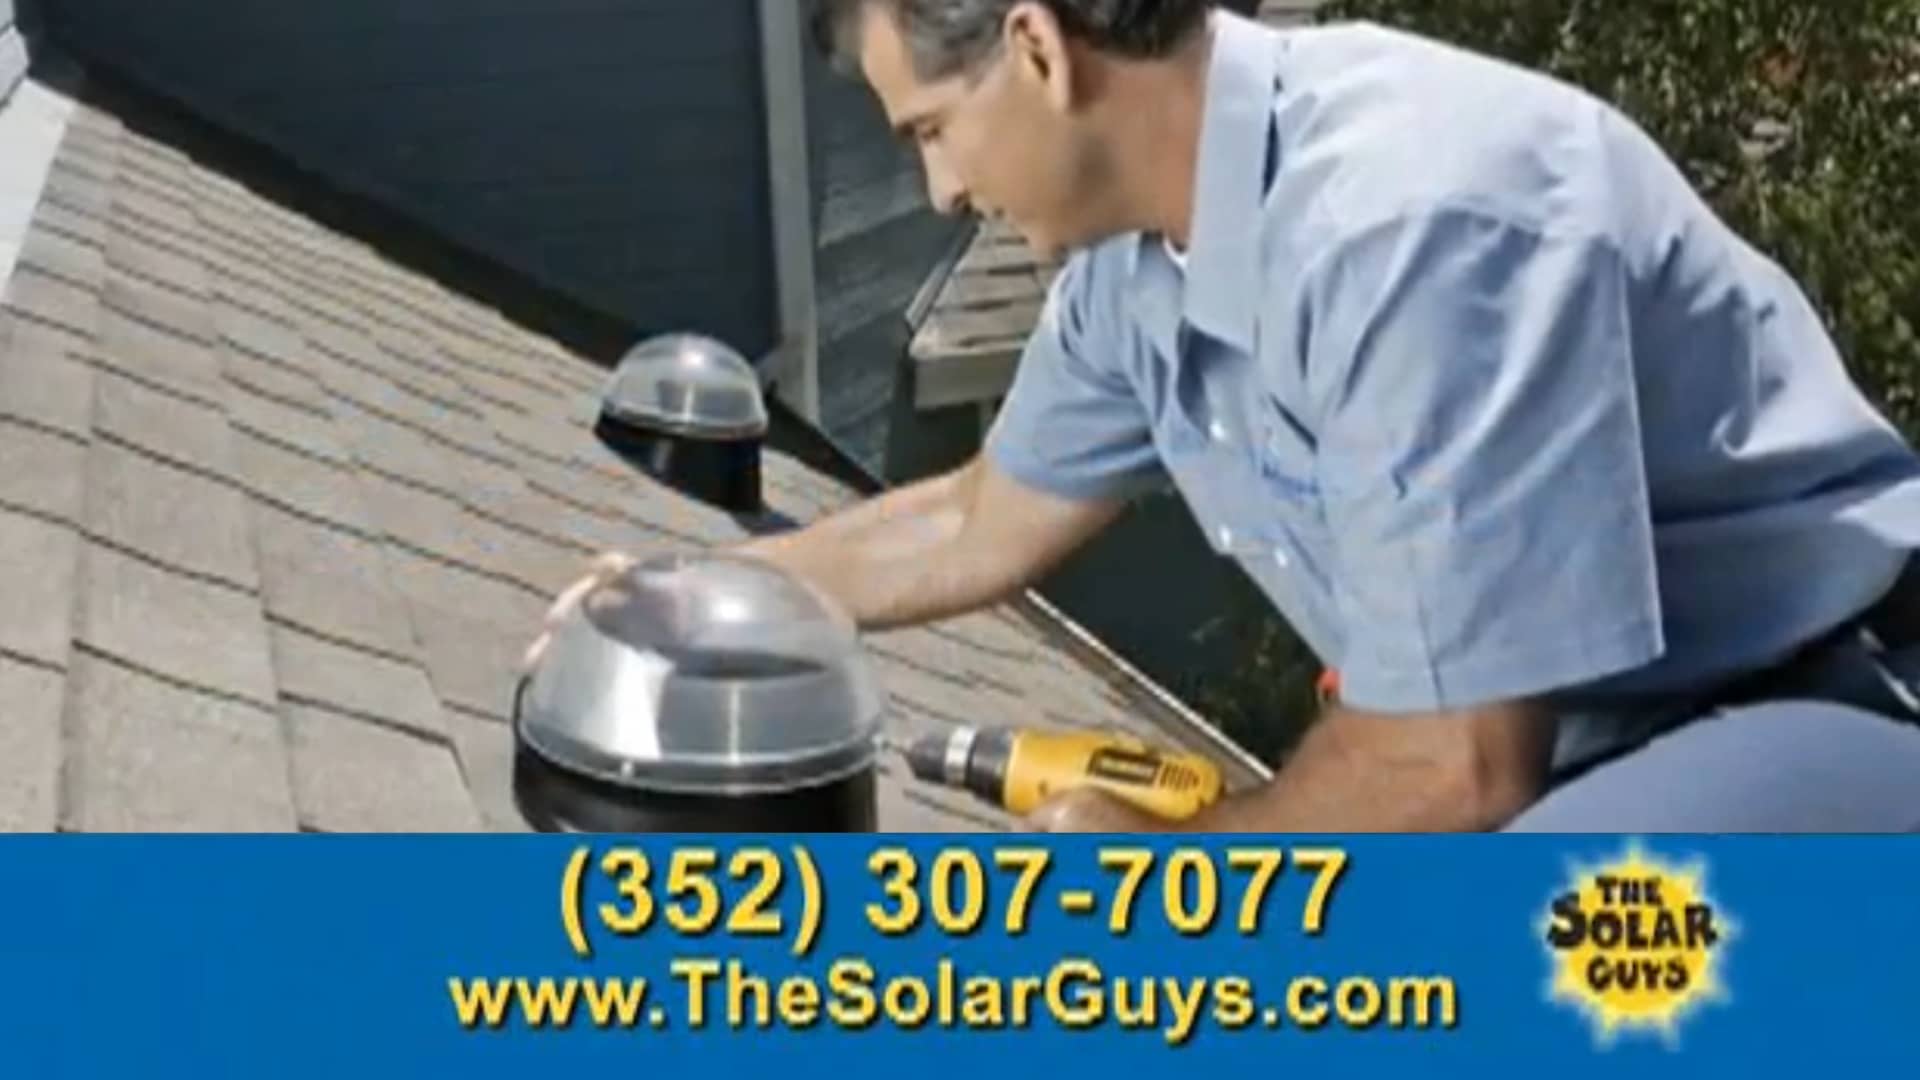 The Solar Guys Complaining Spouses